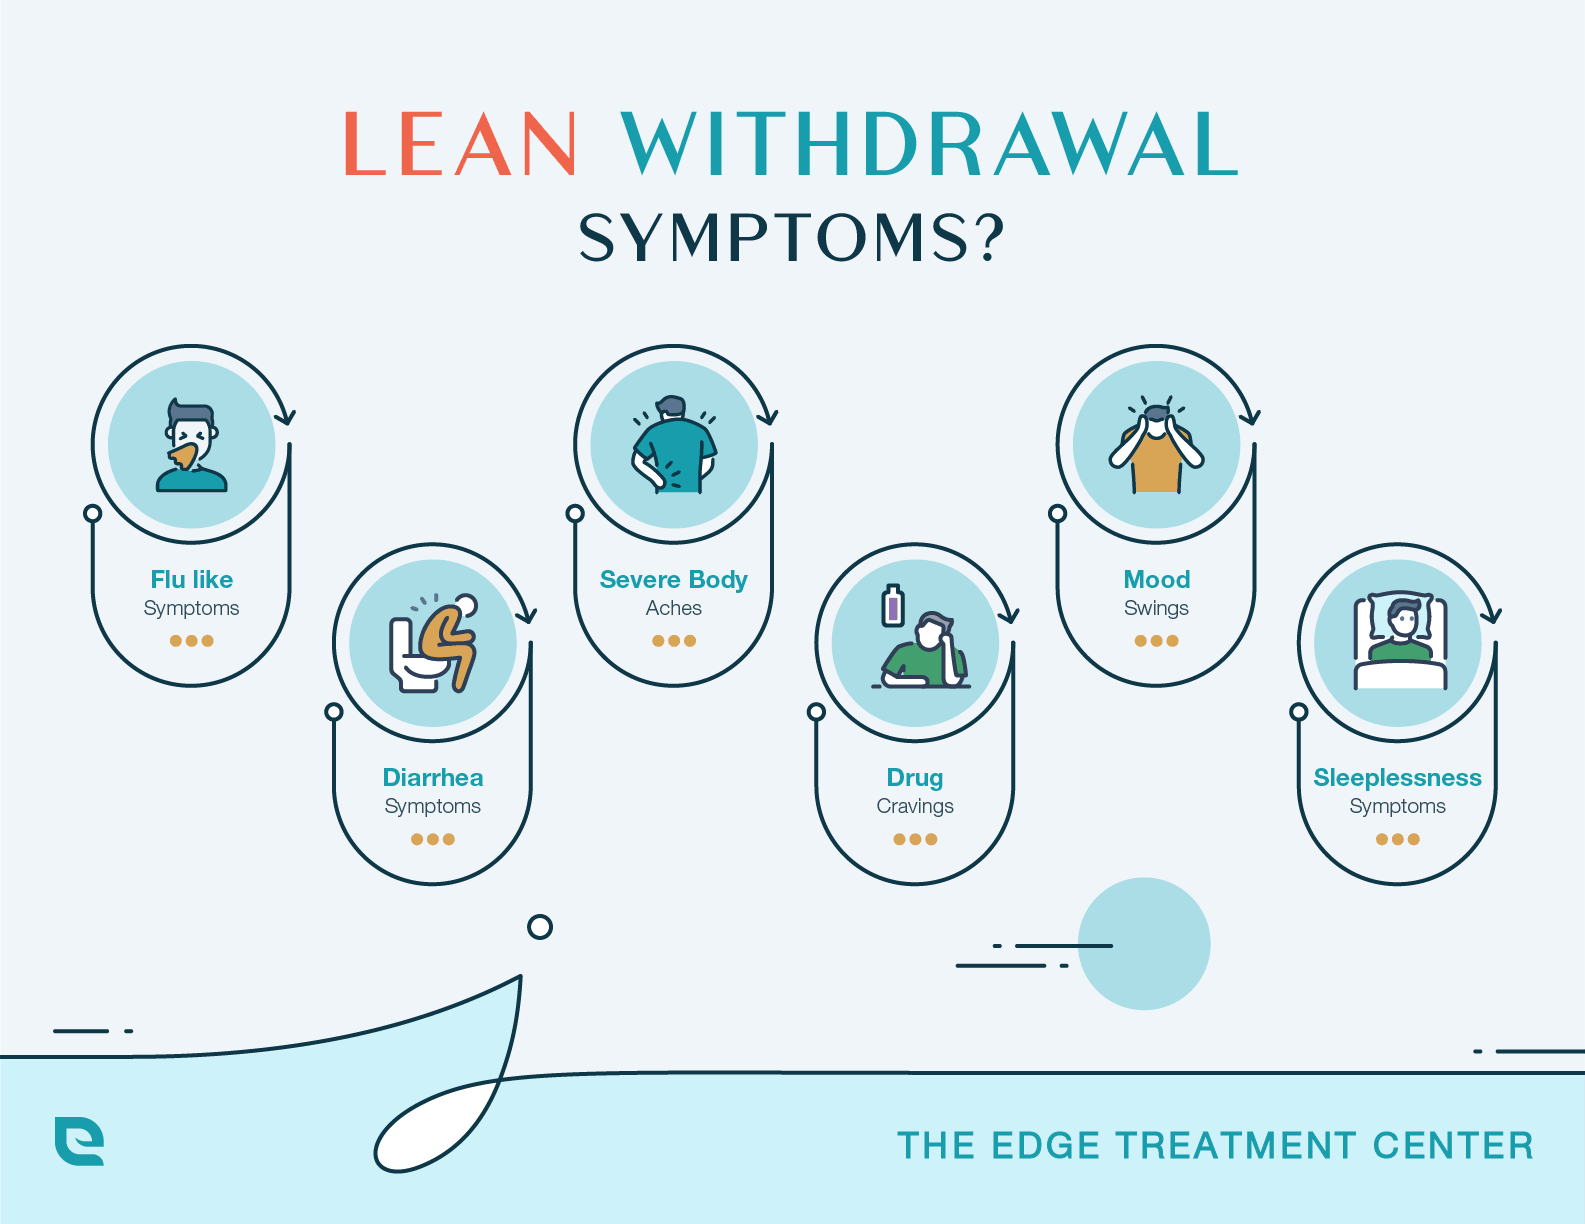 Lean Withdrawal Symptoms. This image showcases all of the withdrawal symptoms of lean.